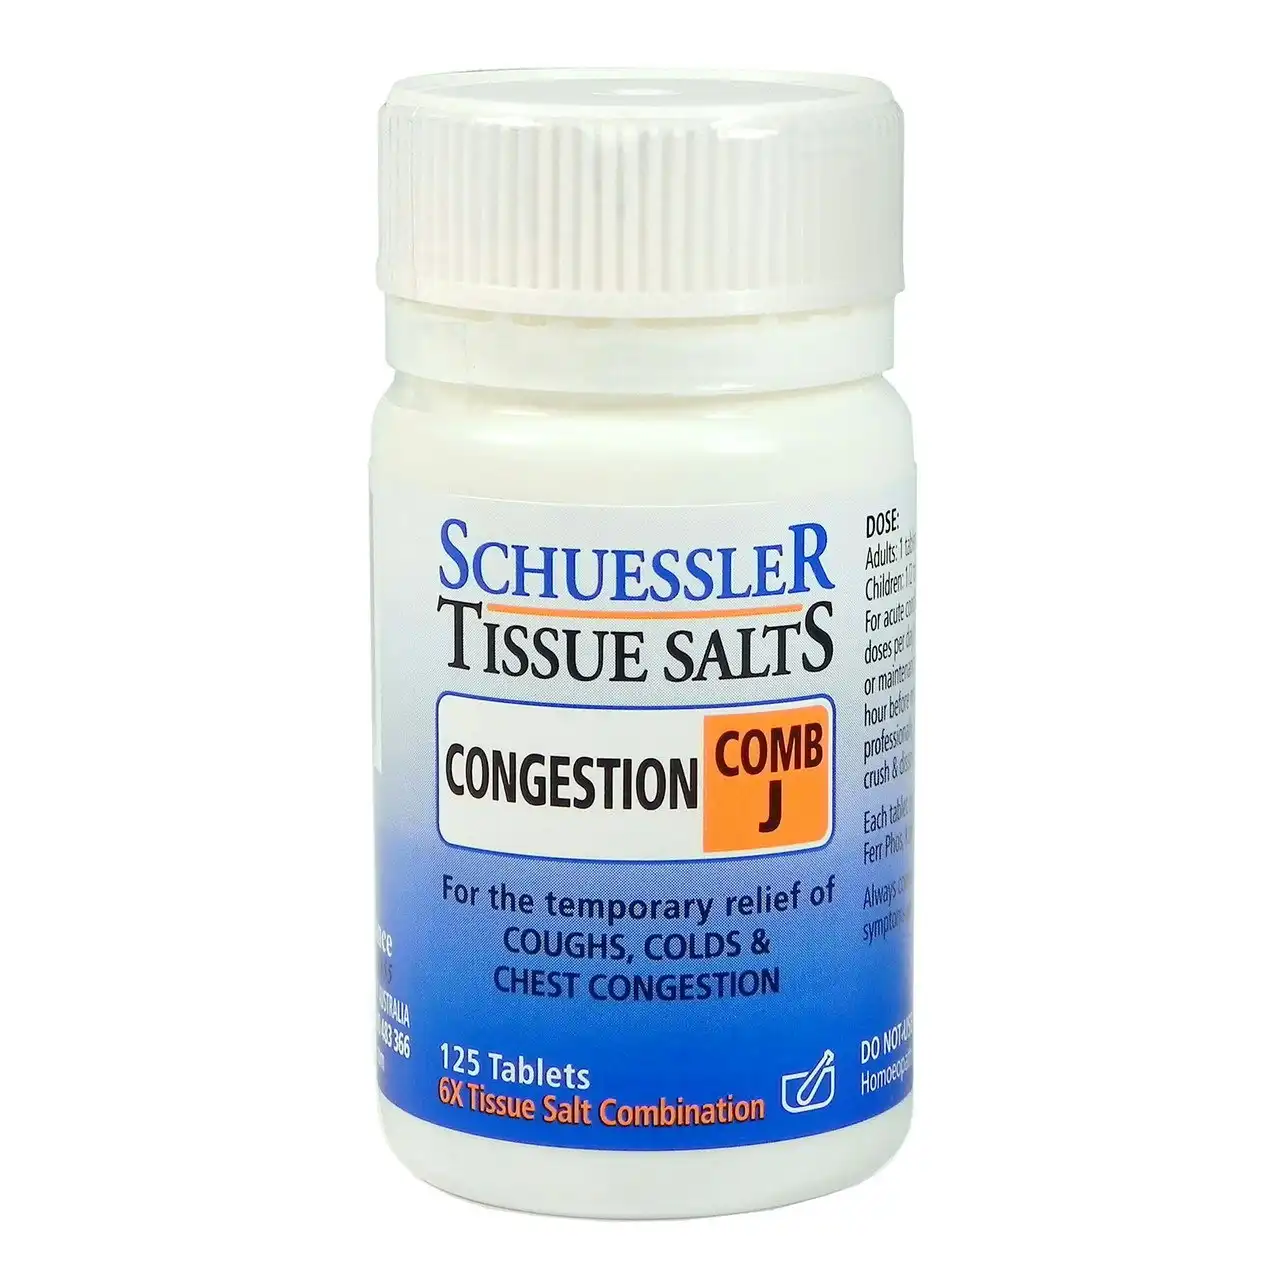 Schuessler Tissue Salts Congestion Comb J (6x) 125 Tablets